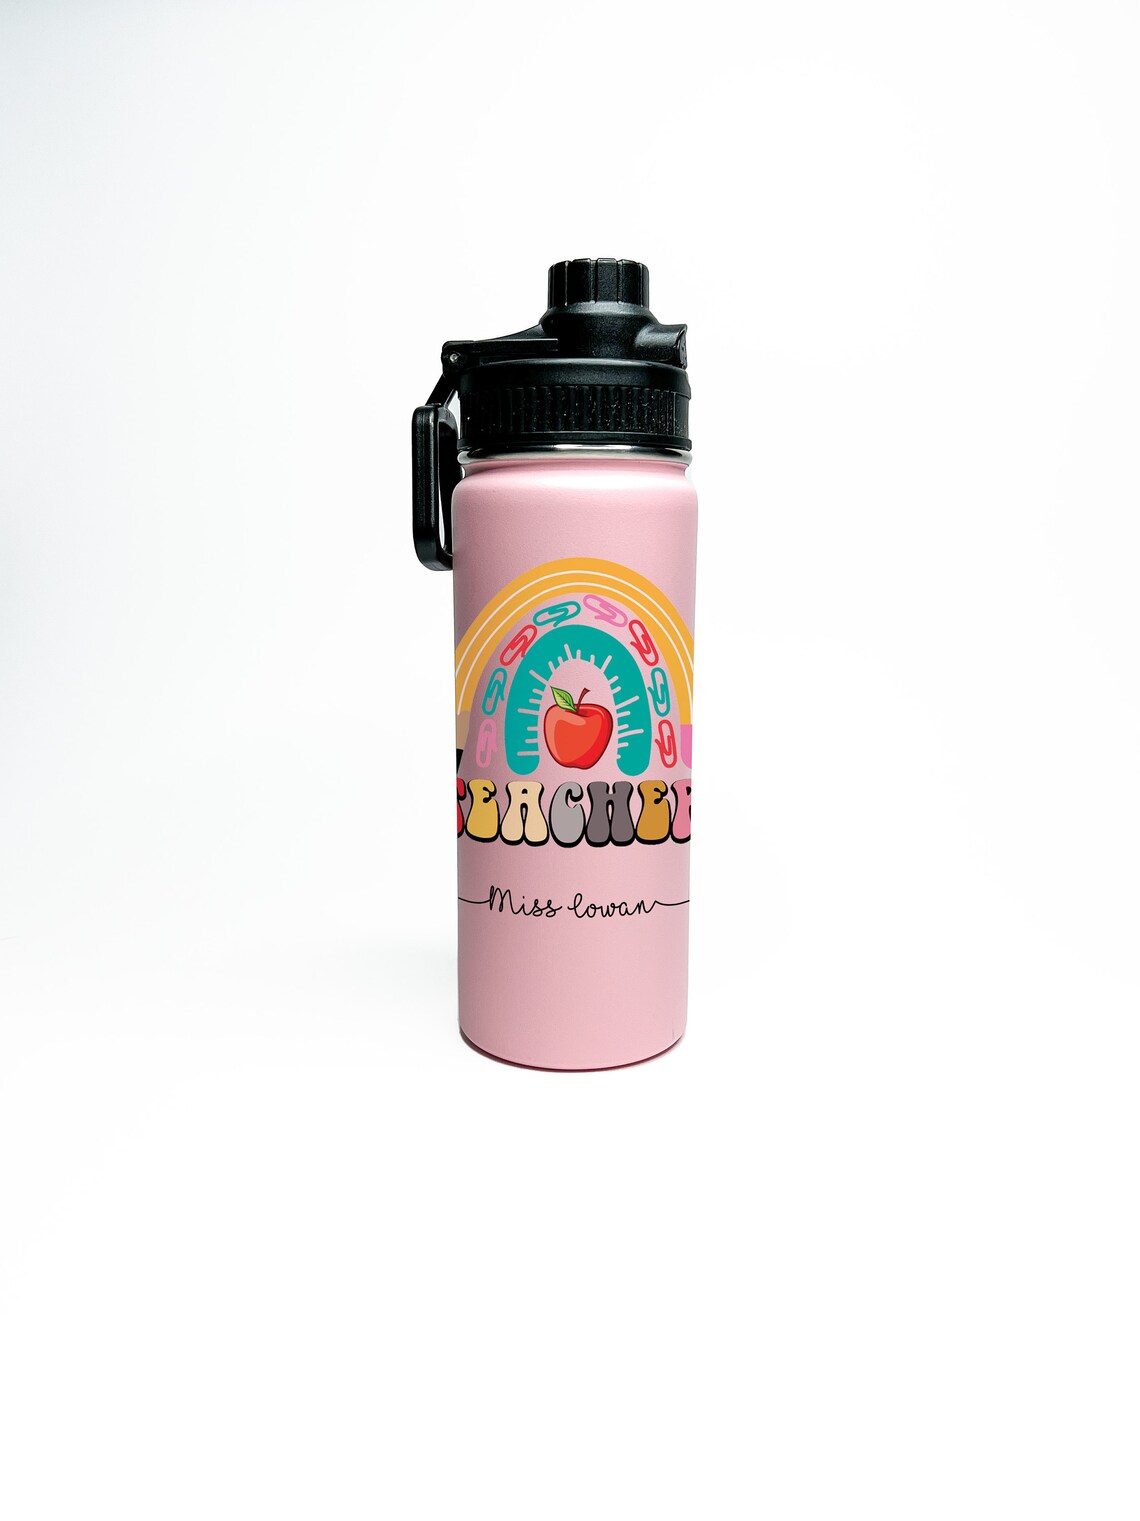 Teacher Water Bottle 18/32 oz Stainless Steel Insulated Flasks